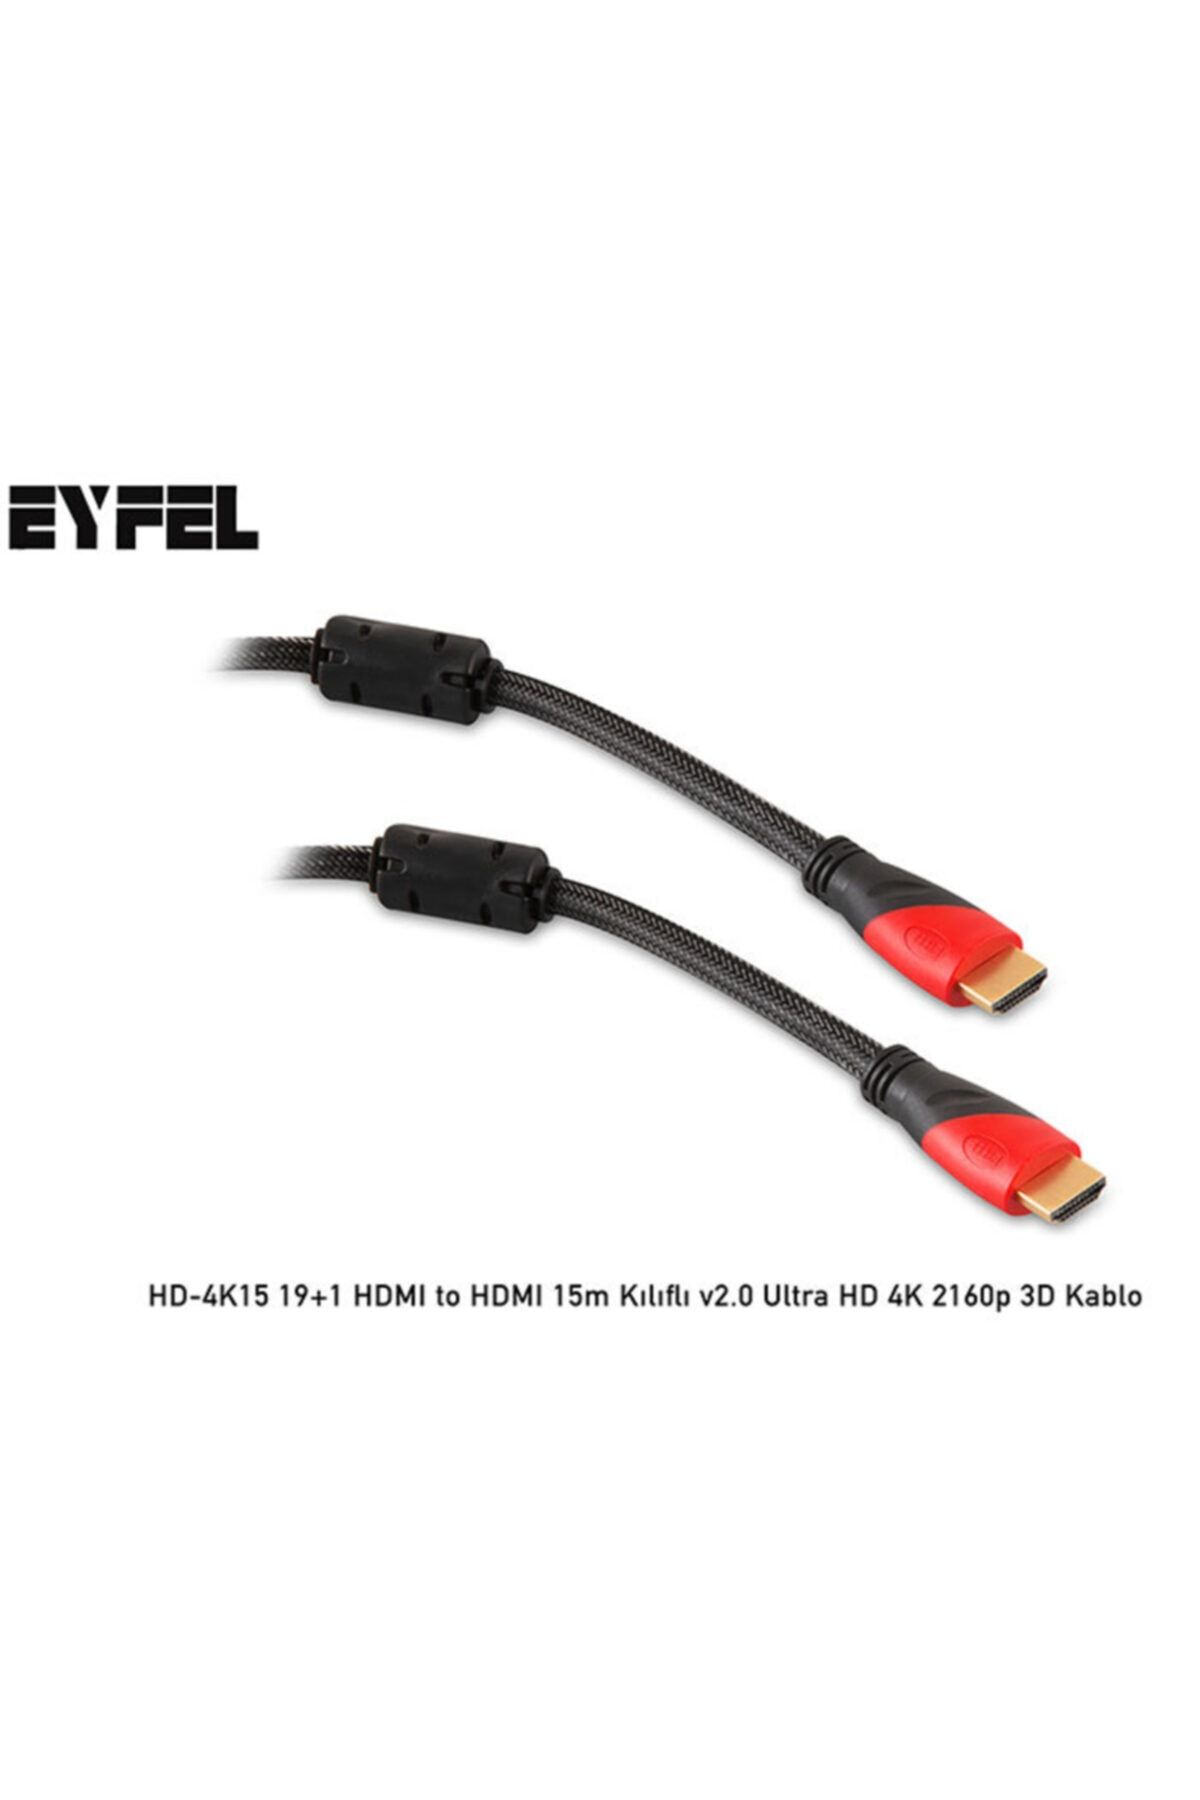 Eyfel 19+1 Hdmı To Hdmı 10m Kılıflı V2.0 Ultra Hd 4k 2160p 3d Kablo